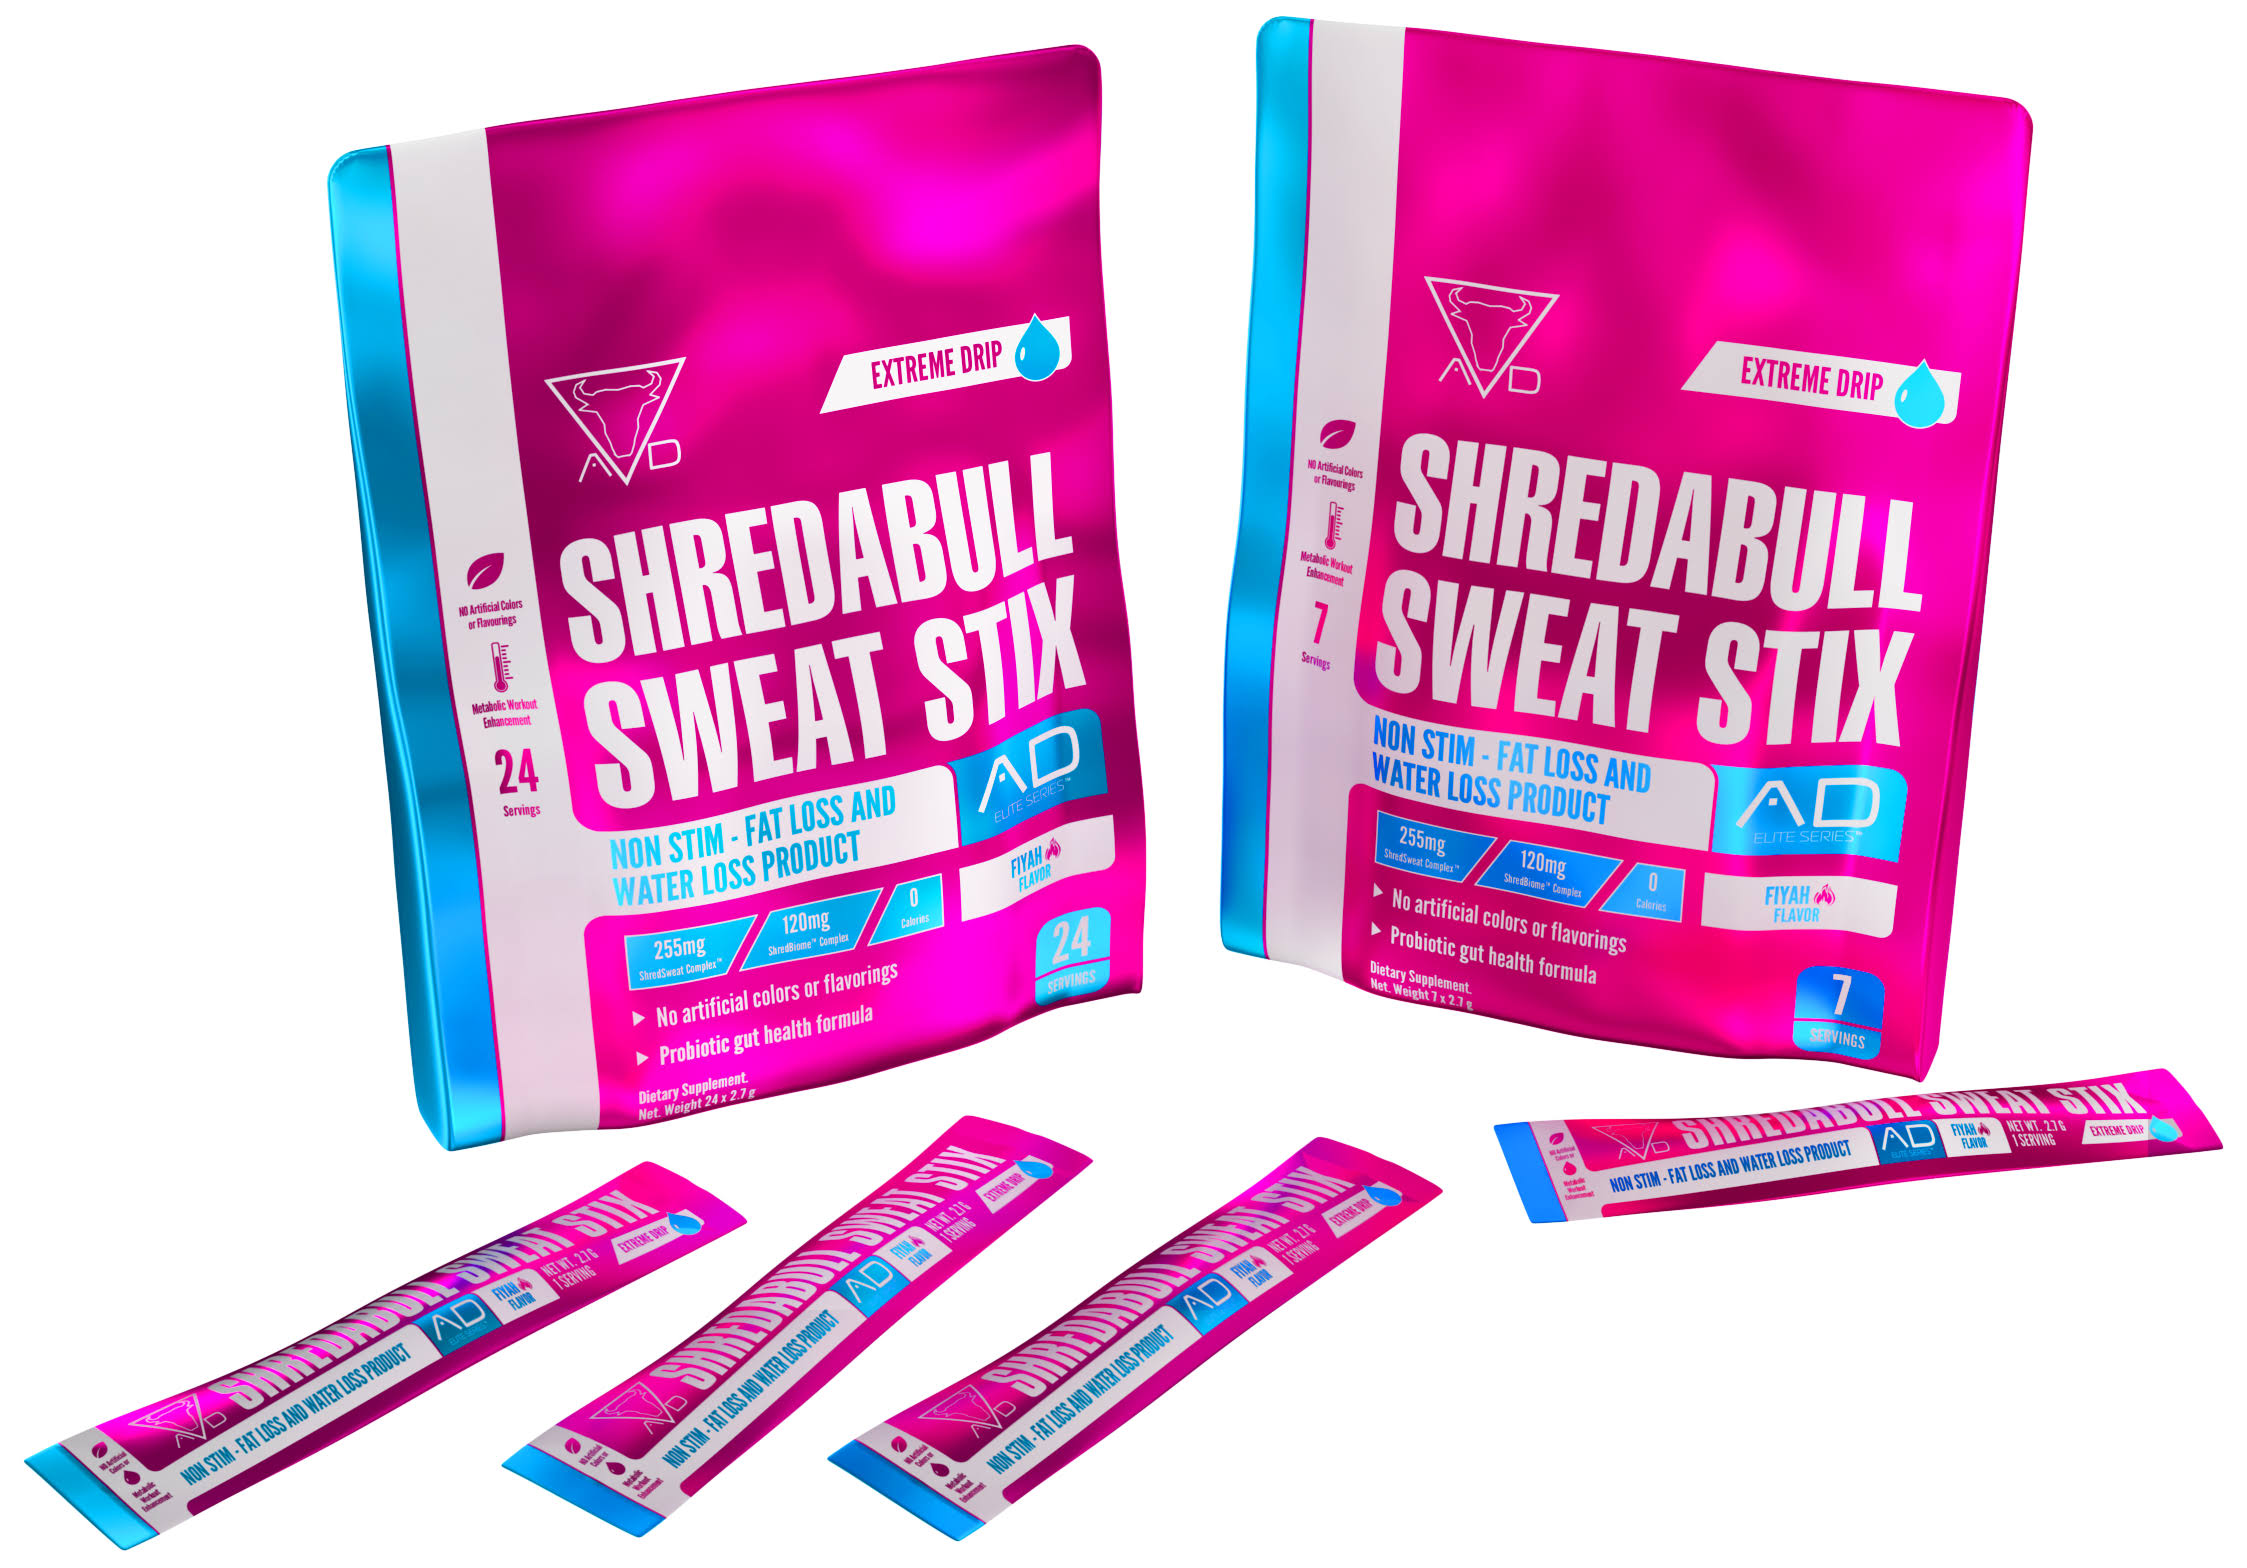 Anabolic Designs Shredabull Sweat Stix 24 Servings / FIYAH